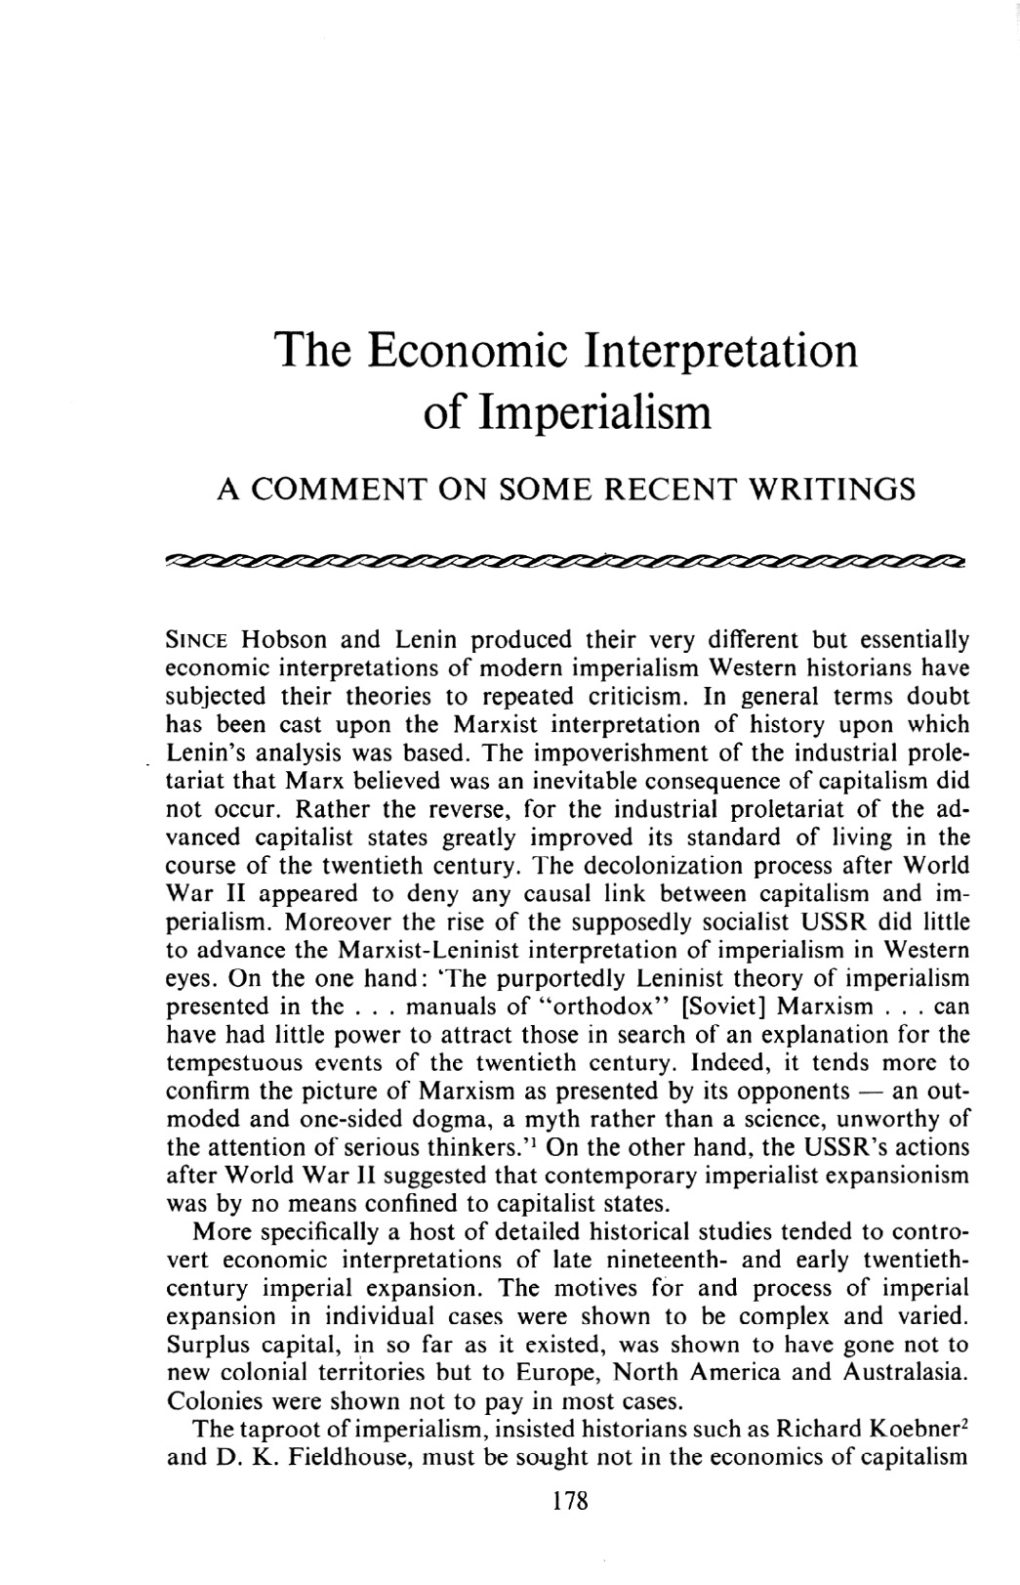 The Economic Interpretation of Imperialism